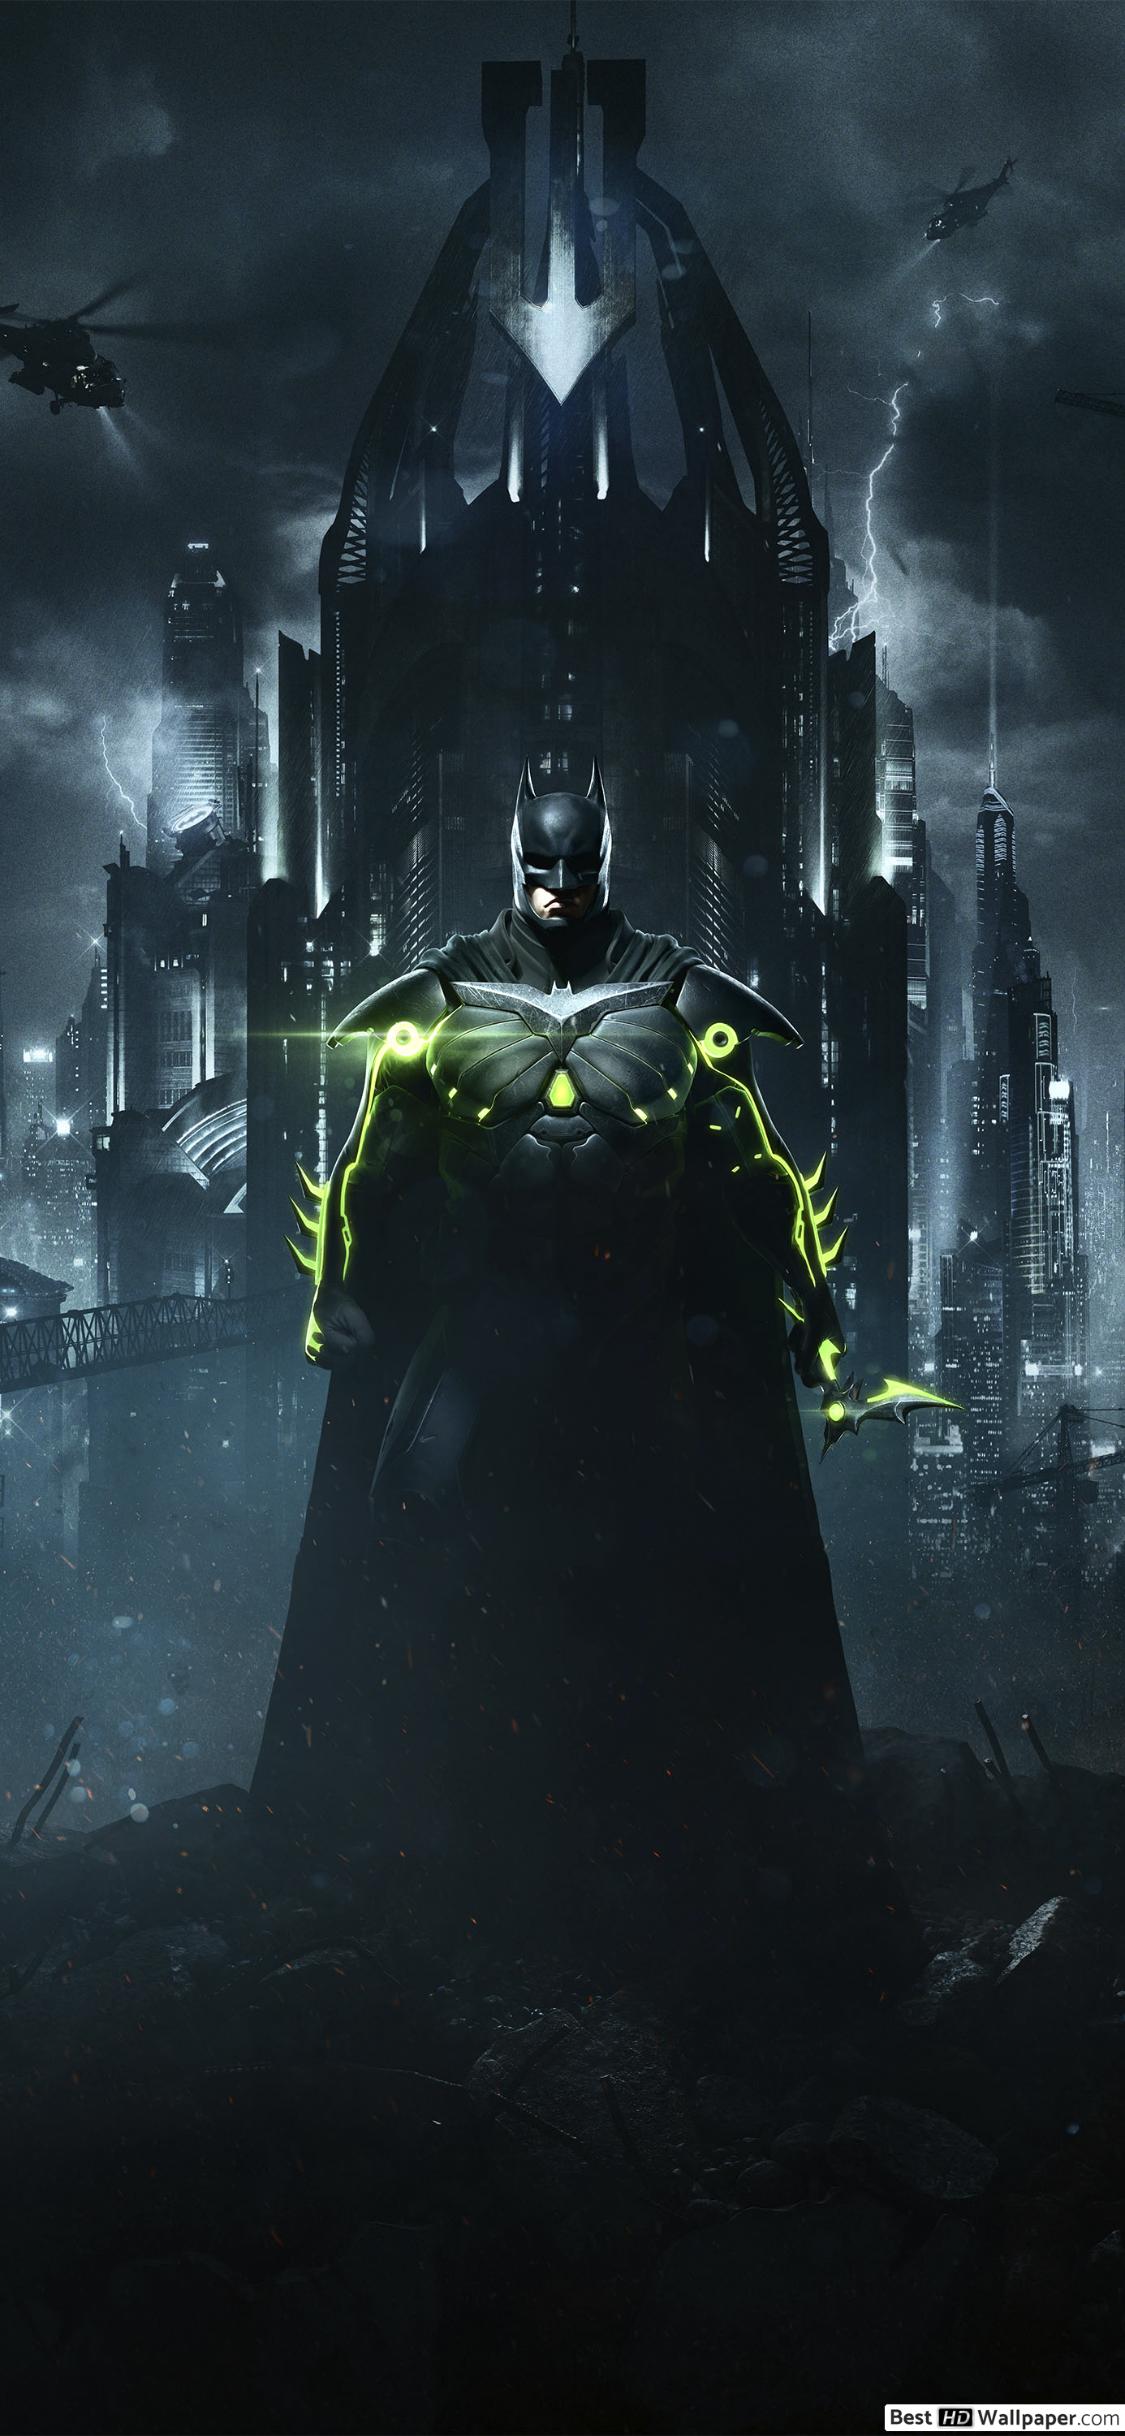 WoowPaper: Batman Wallpaper iPhone X